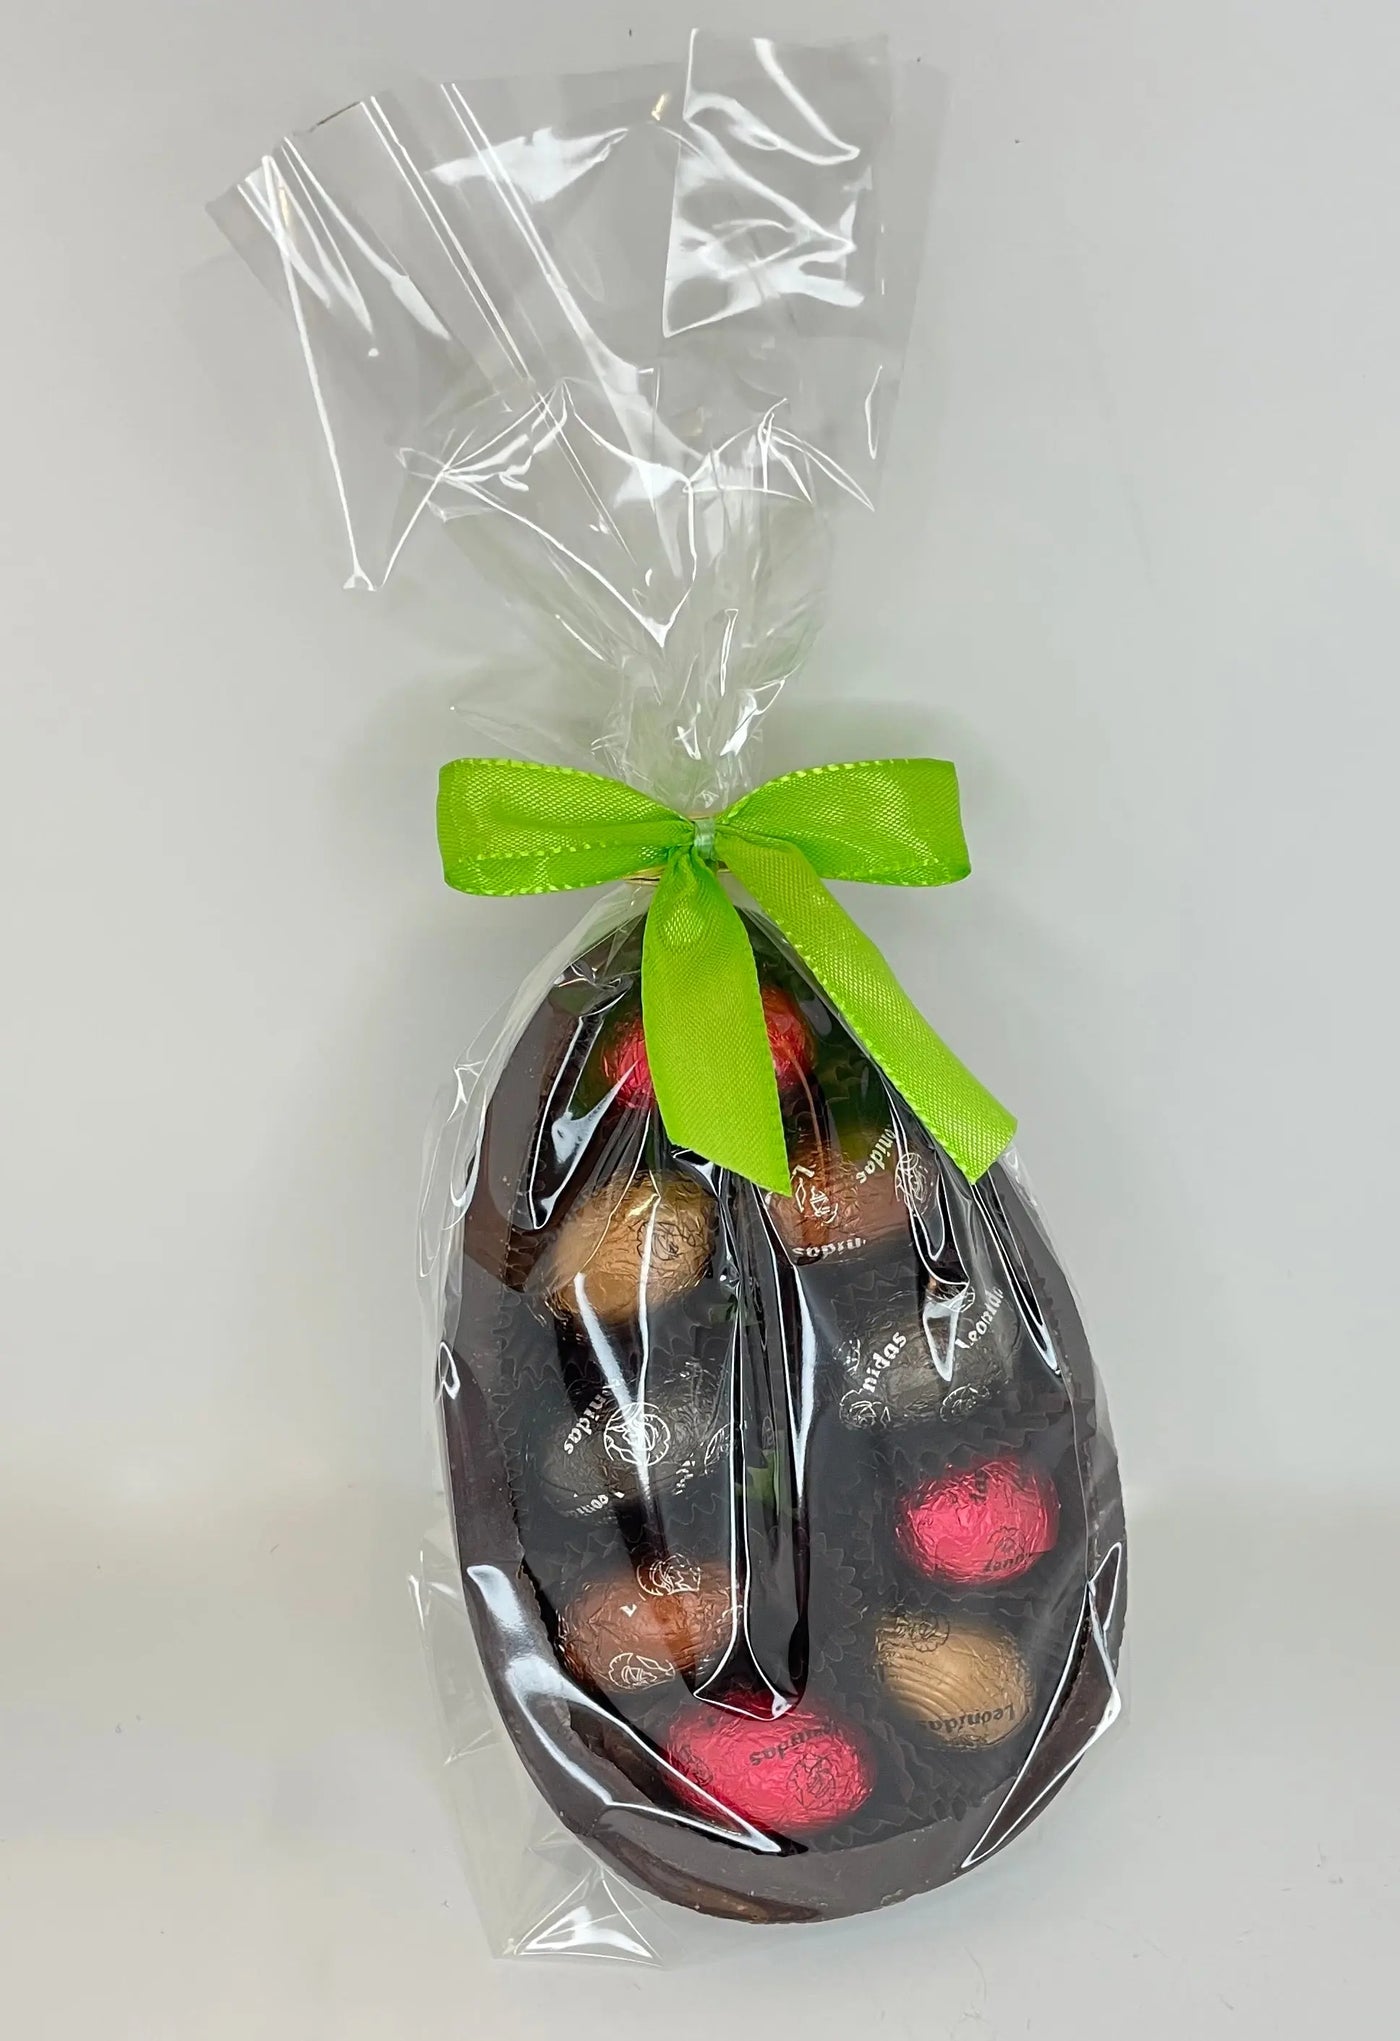 Copy of Leonidas Easter Set Of 2 Half Dark Chocolate Egg with Assorted Dark Mini Eggs, 180g Approx Leonidas Kensington